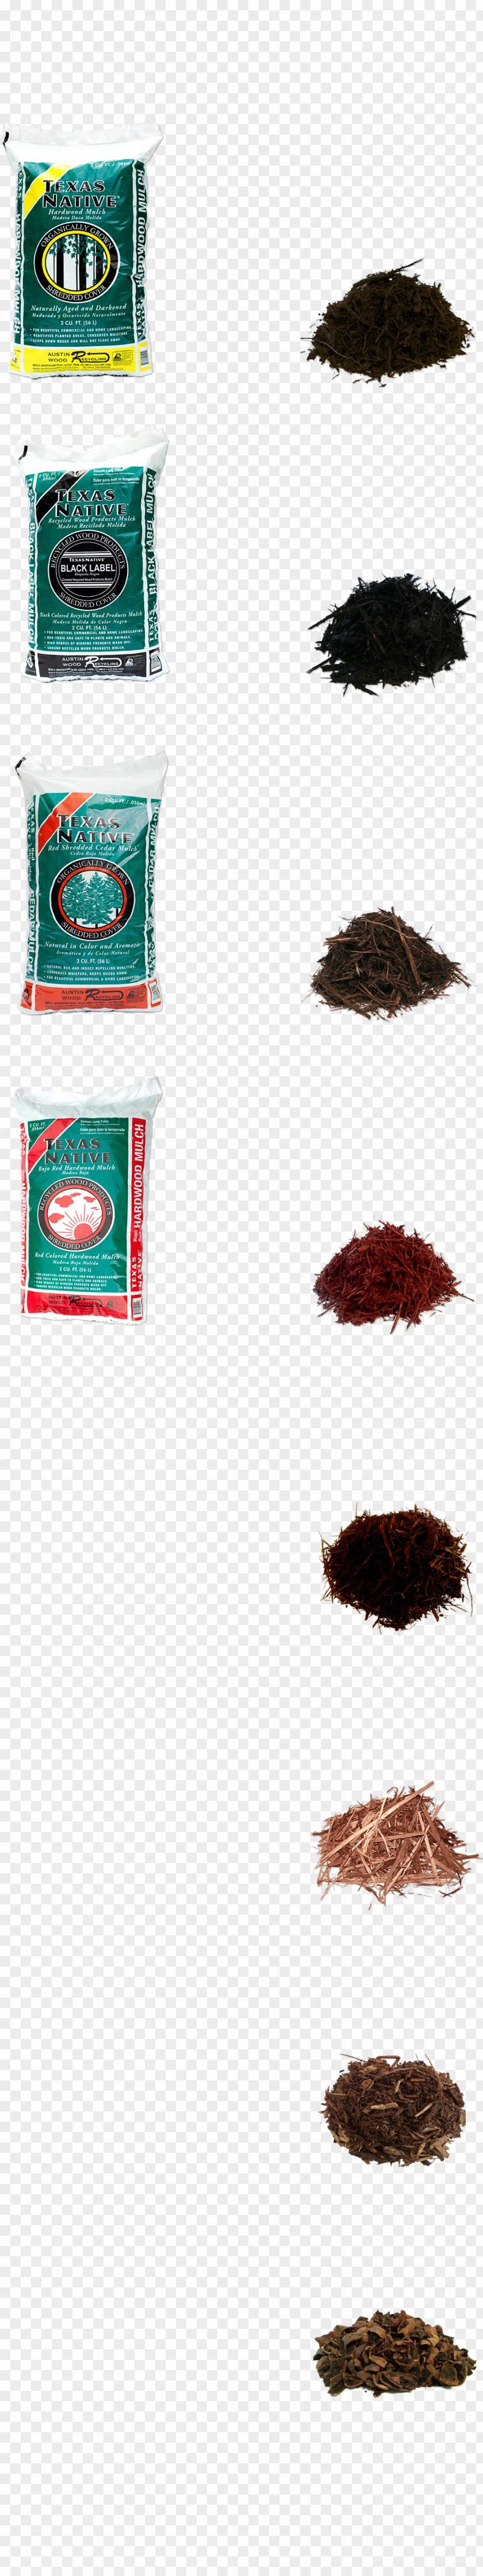 Jujube Mulch Soil Nutrient Austin Wood Recycling Hummus PNG